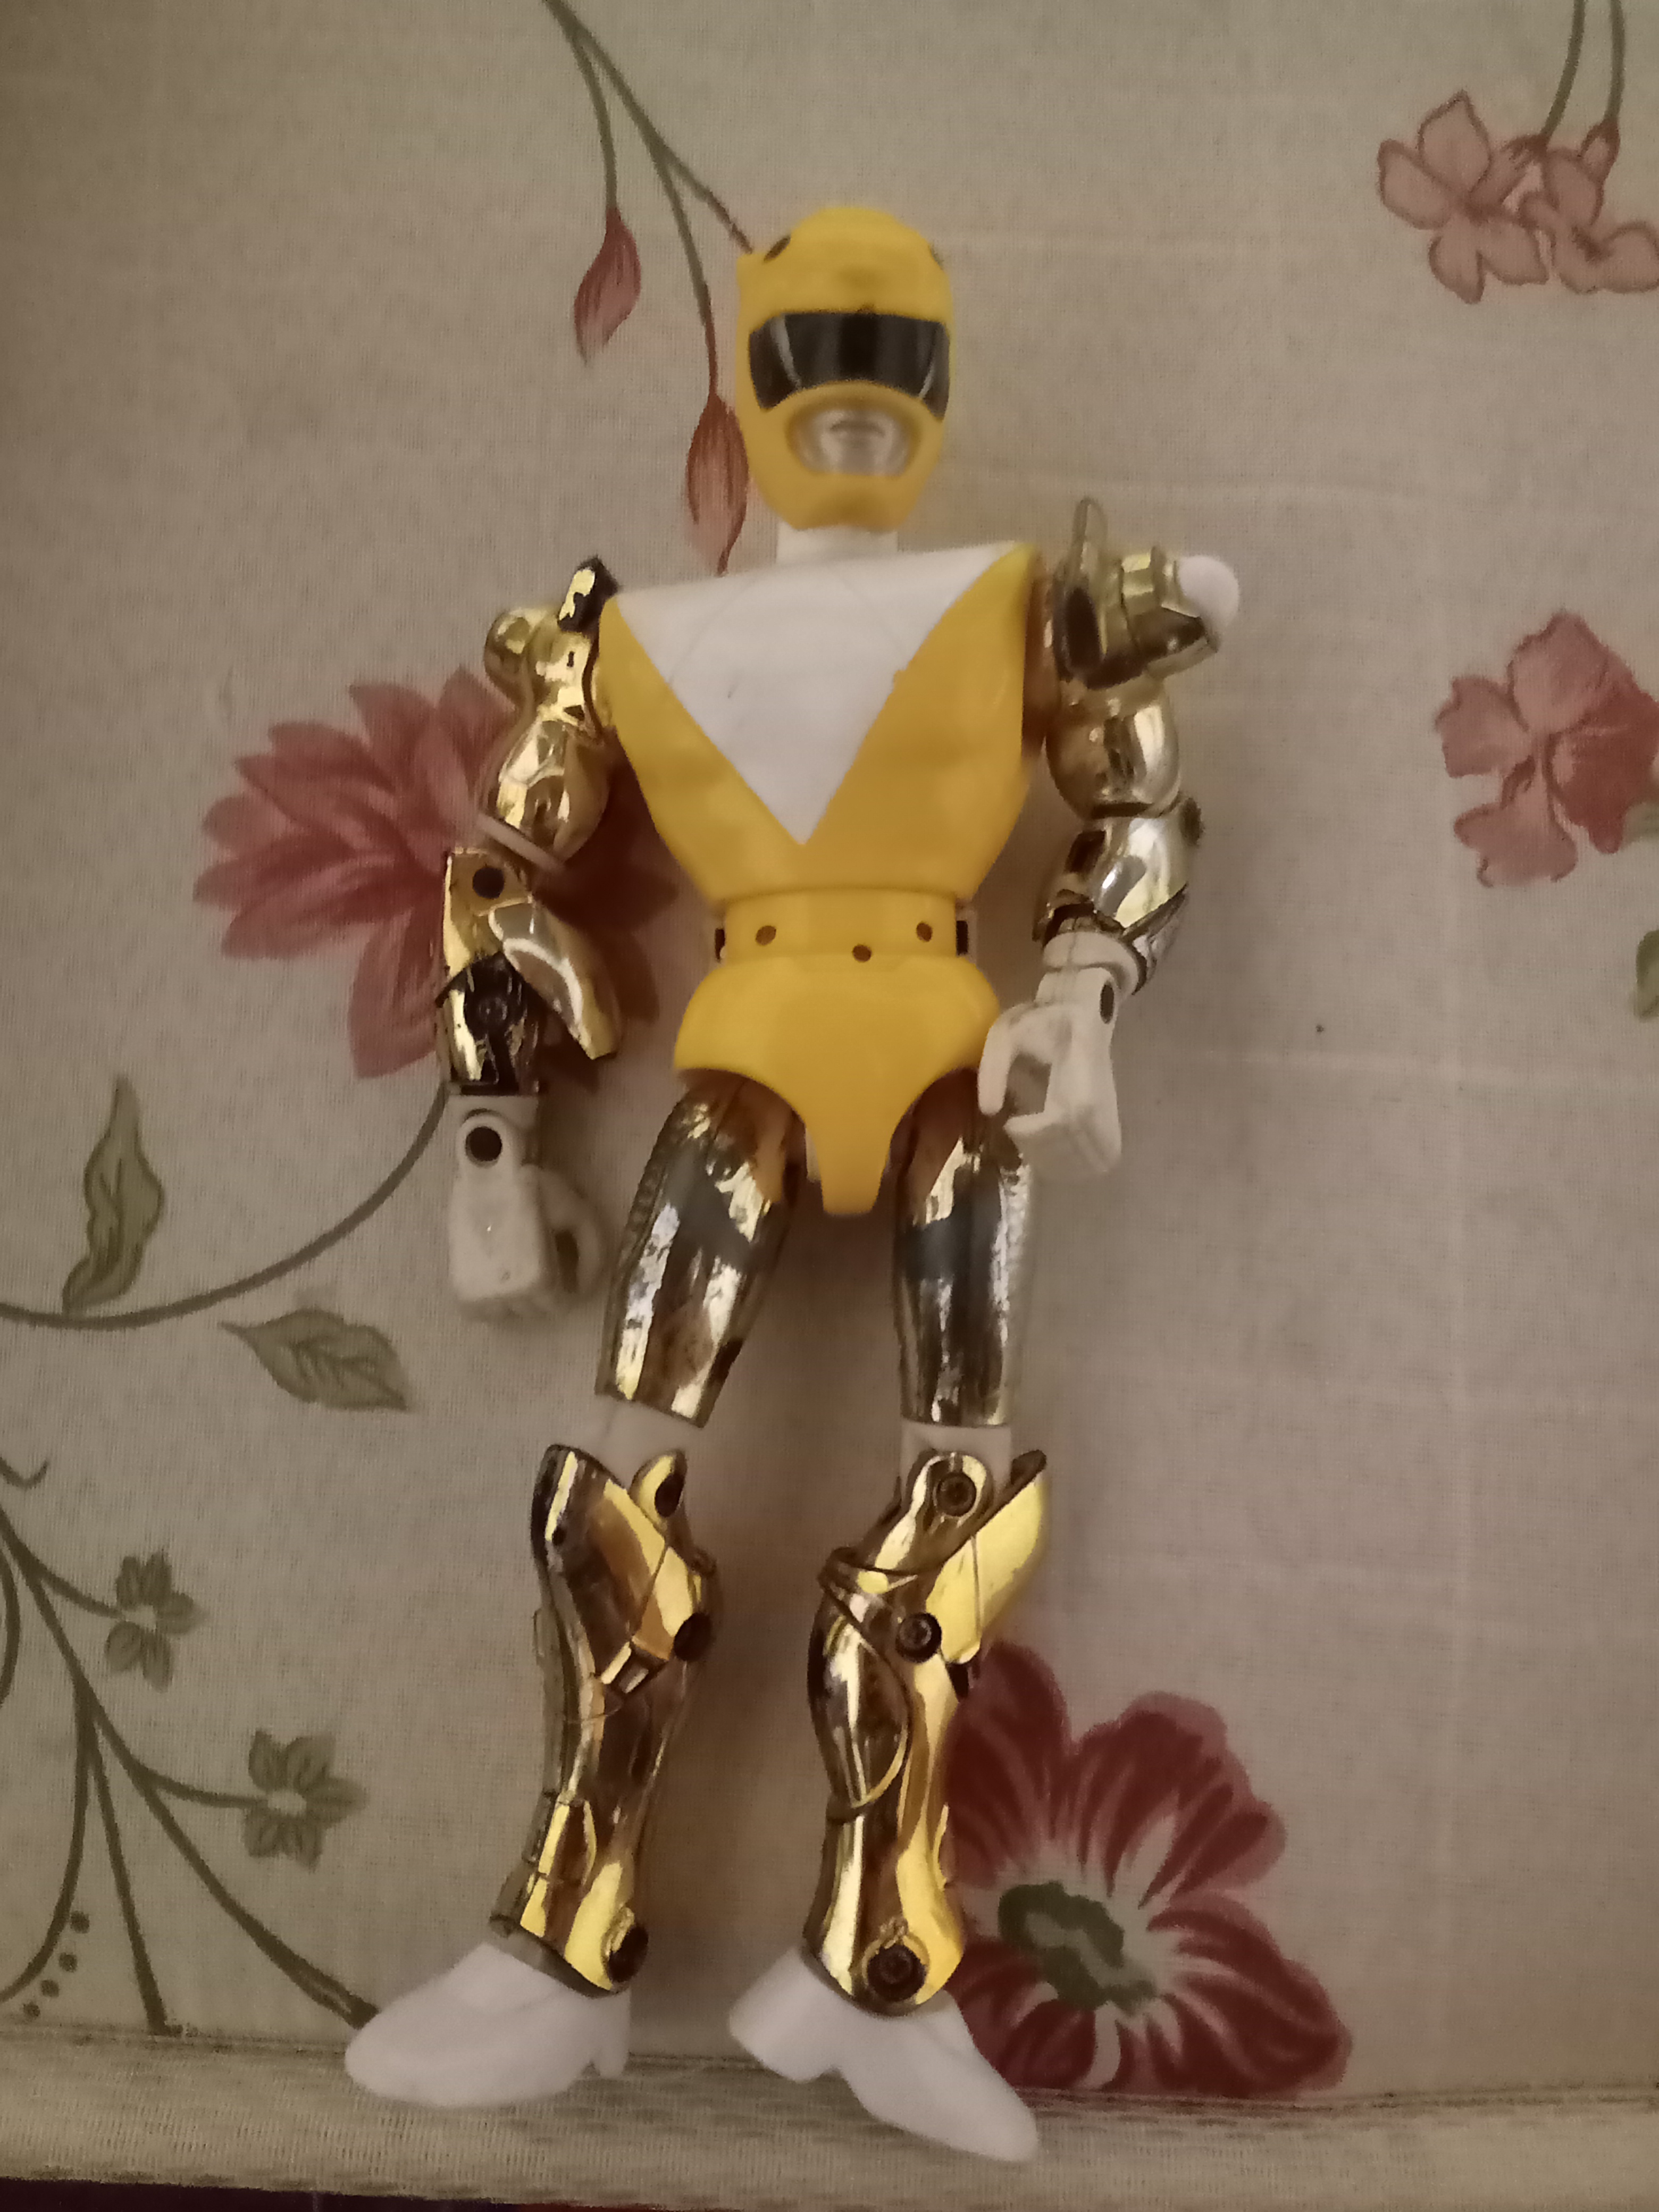 Yellow Power Rangers Hybrid figure